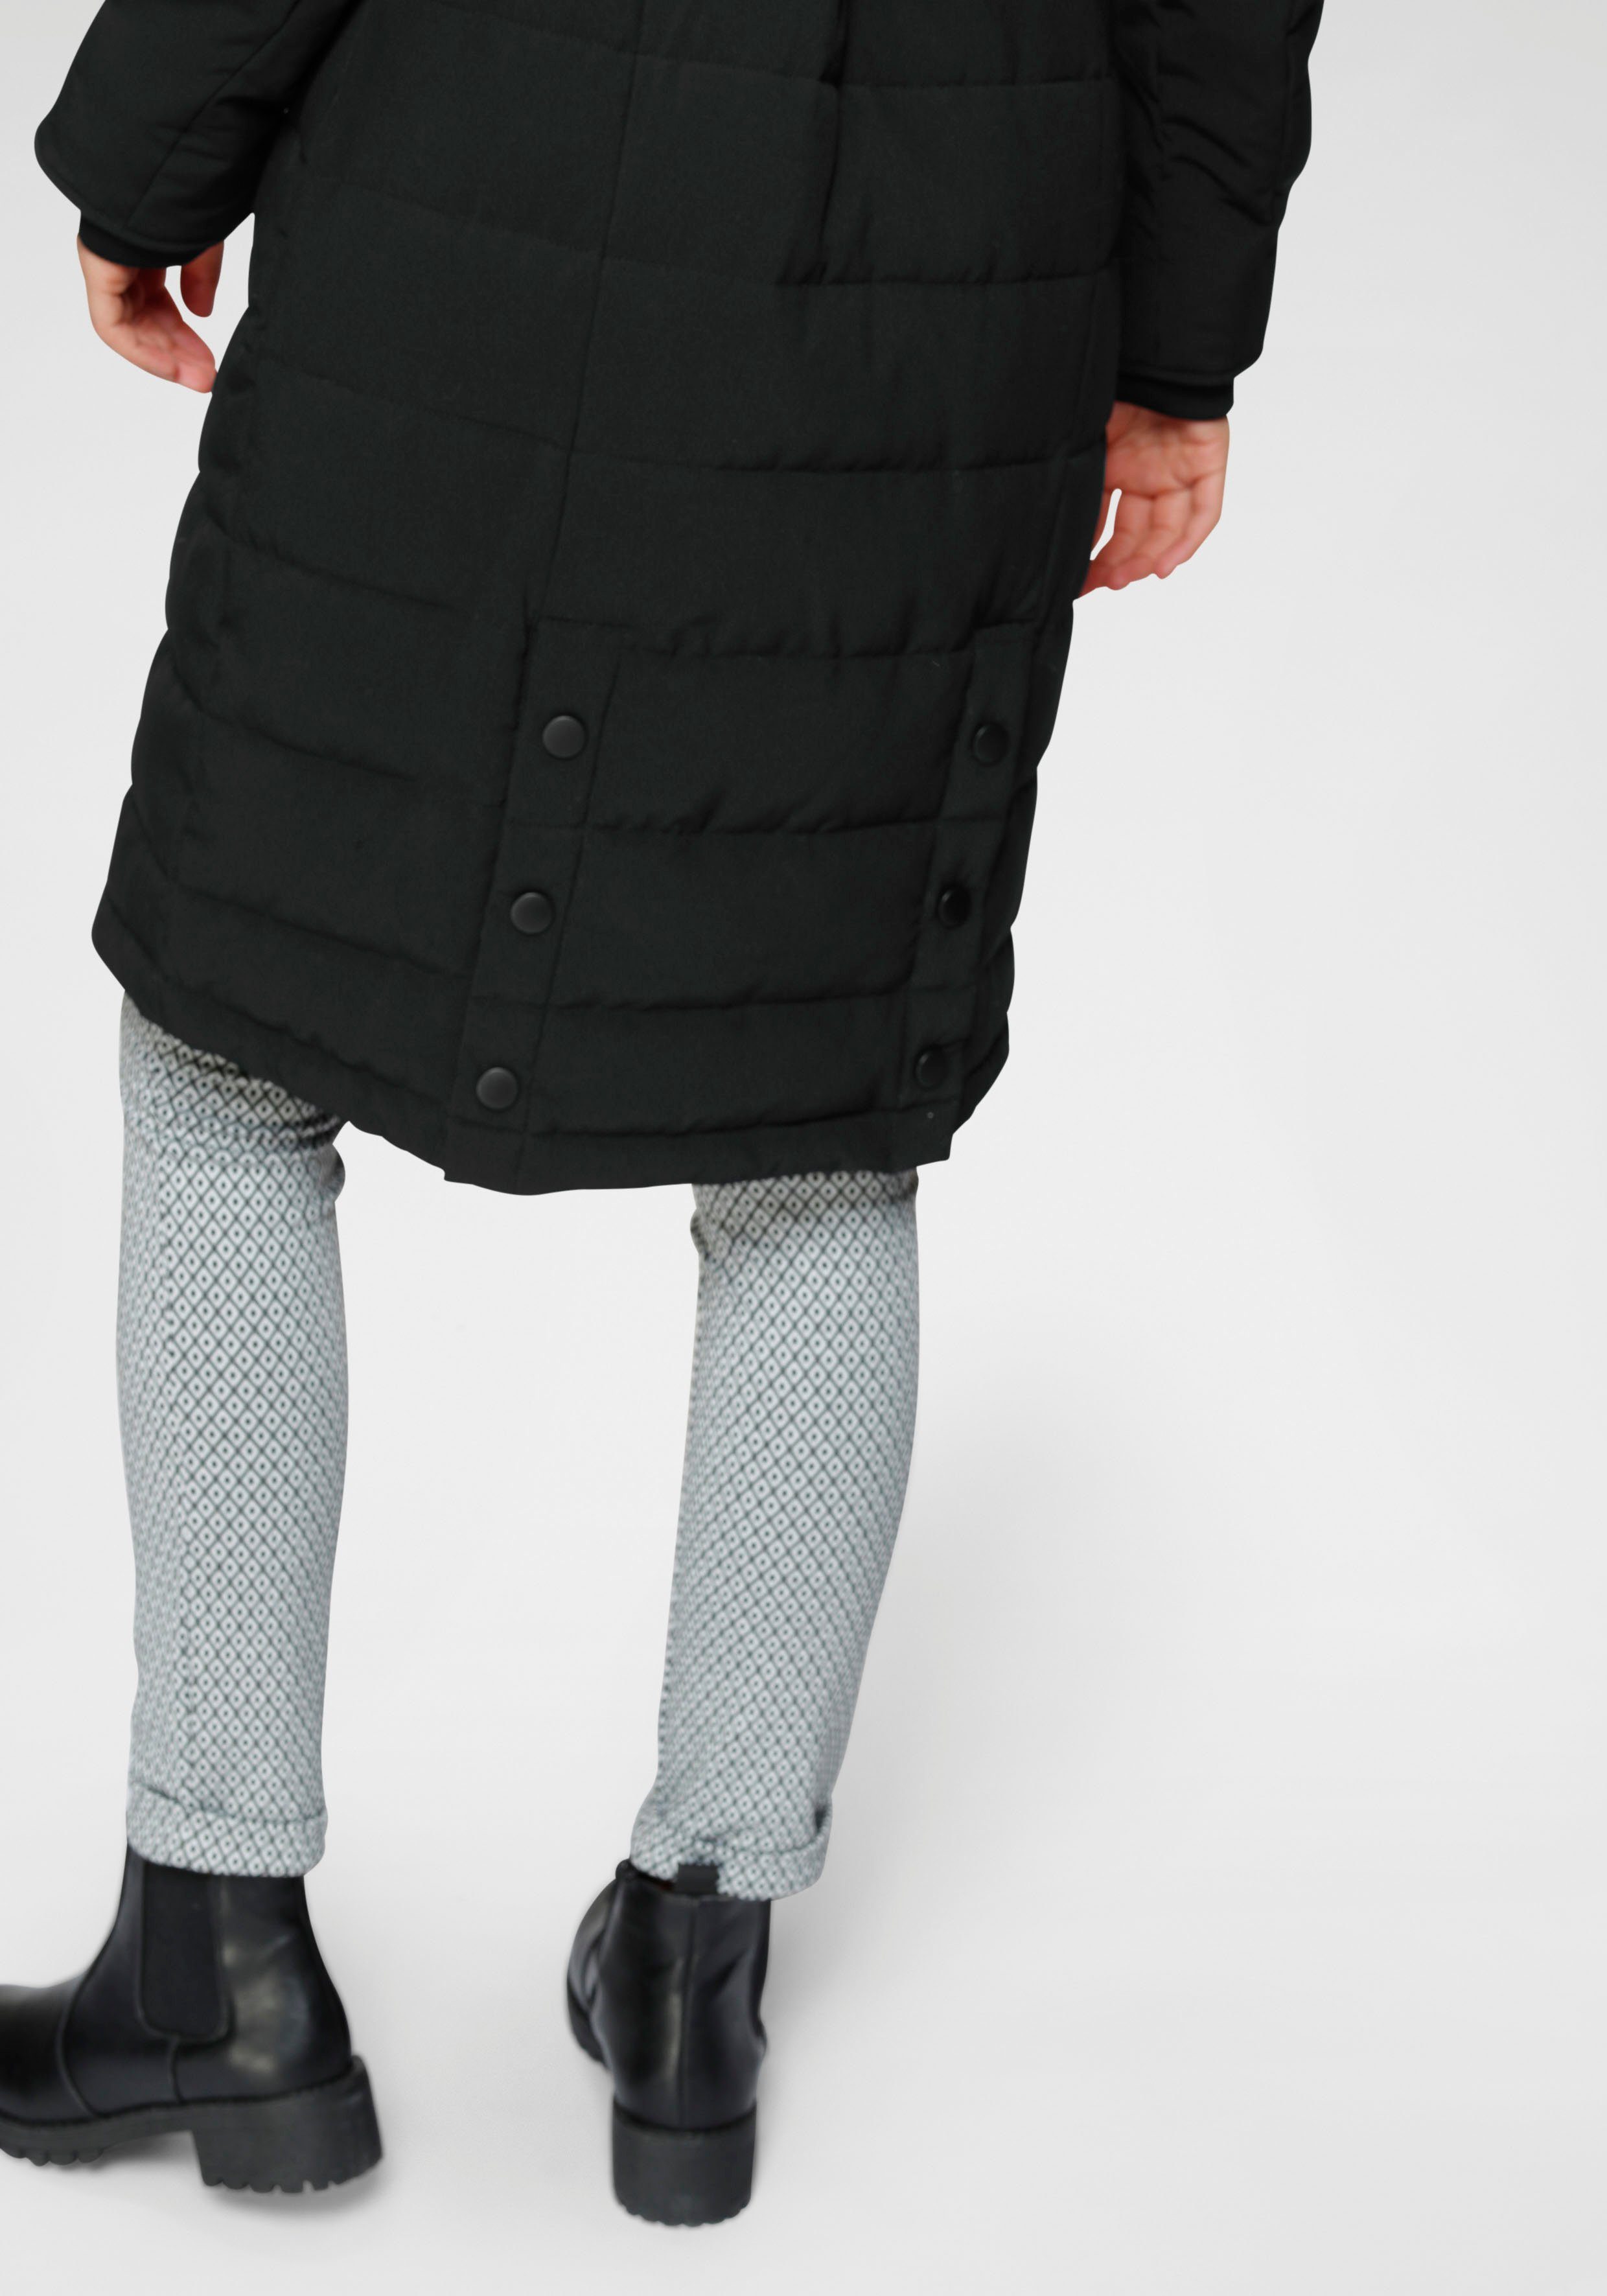 ALPENBLITZ Steppmantel Oslo & Markenprägung dem abnehmbarer auf nachhaltigem long aus Mantel (Jacke Material) Kuschel-Kapuze mit Gürtel black